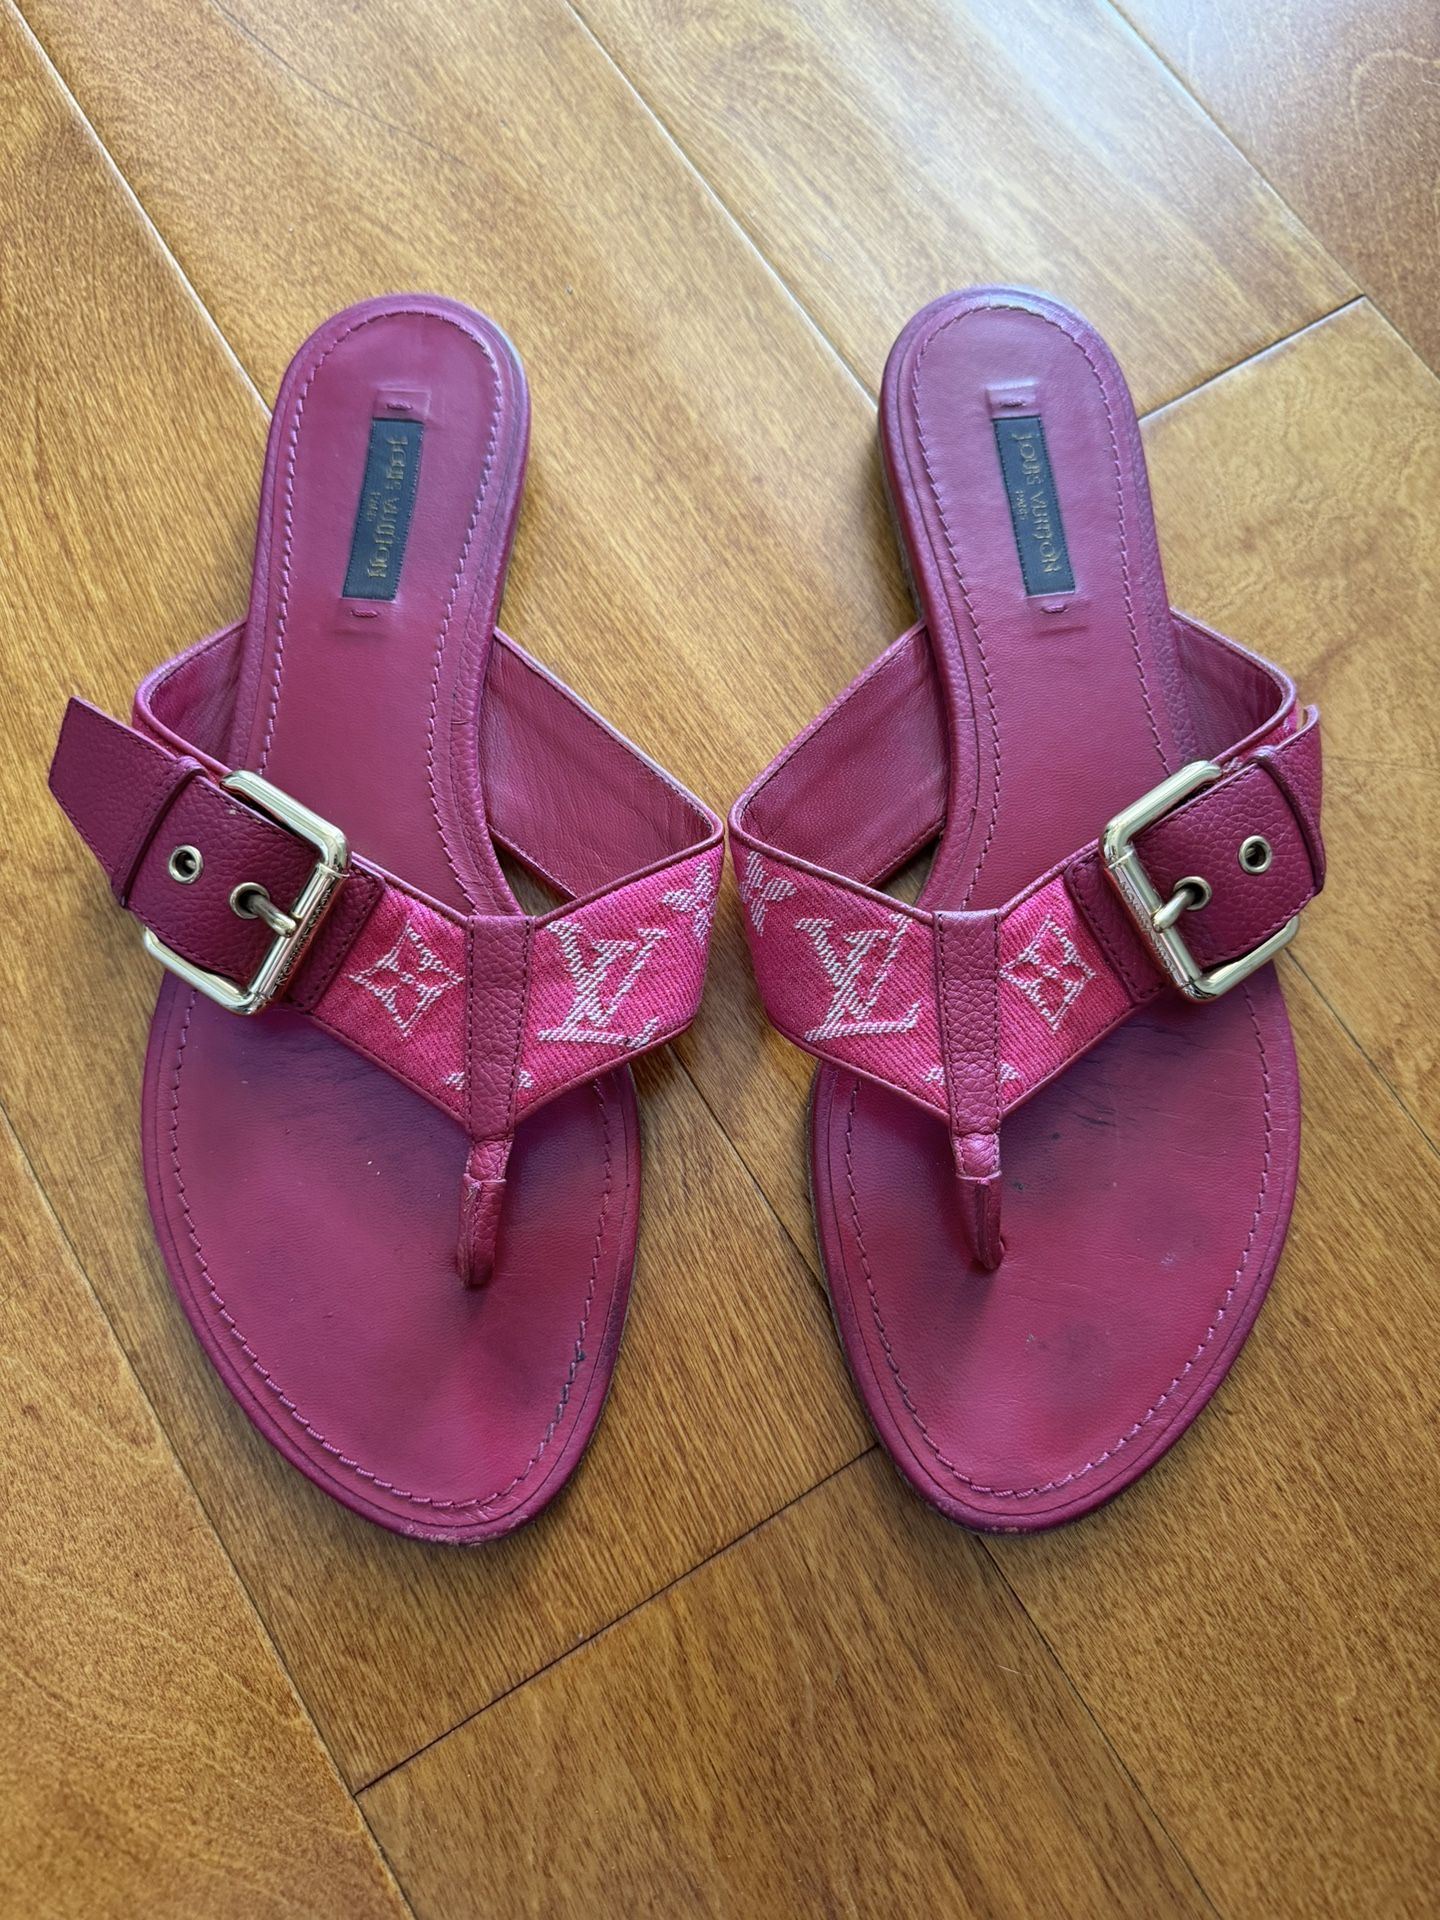 Louis Vuitton Sandals Flip Flops Leather Authentic Pink Peony Raspberry LV 